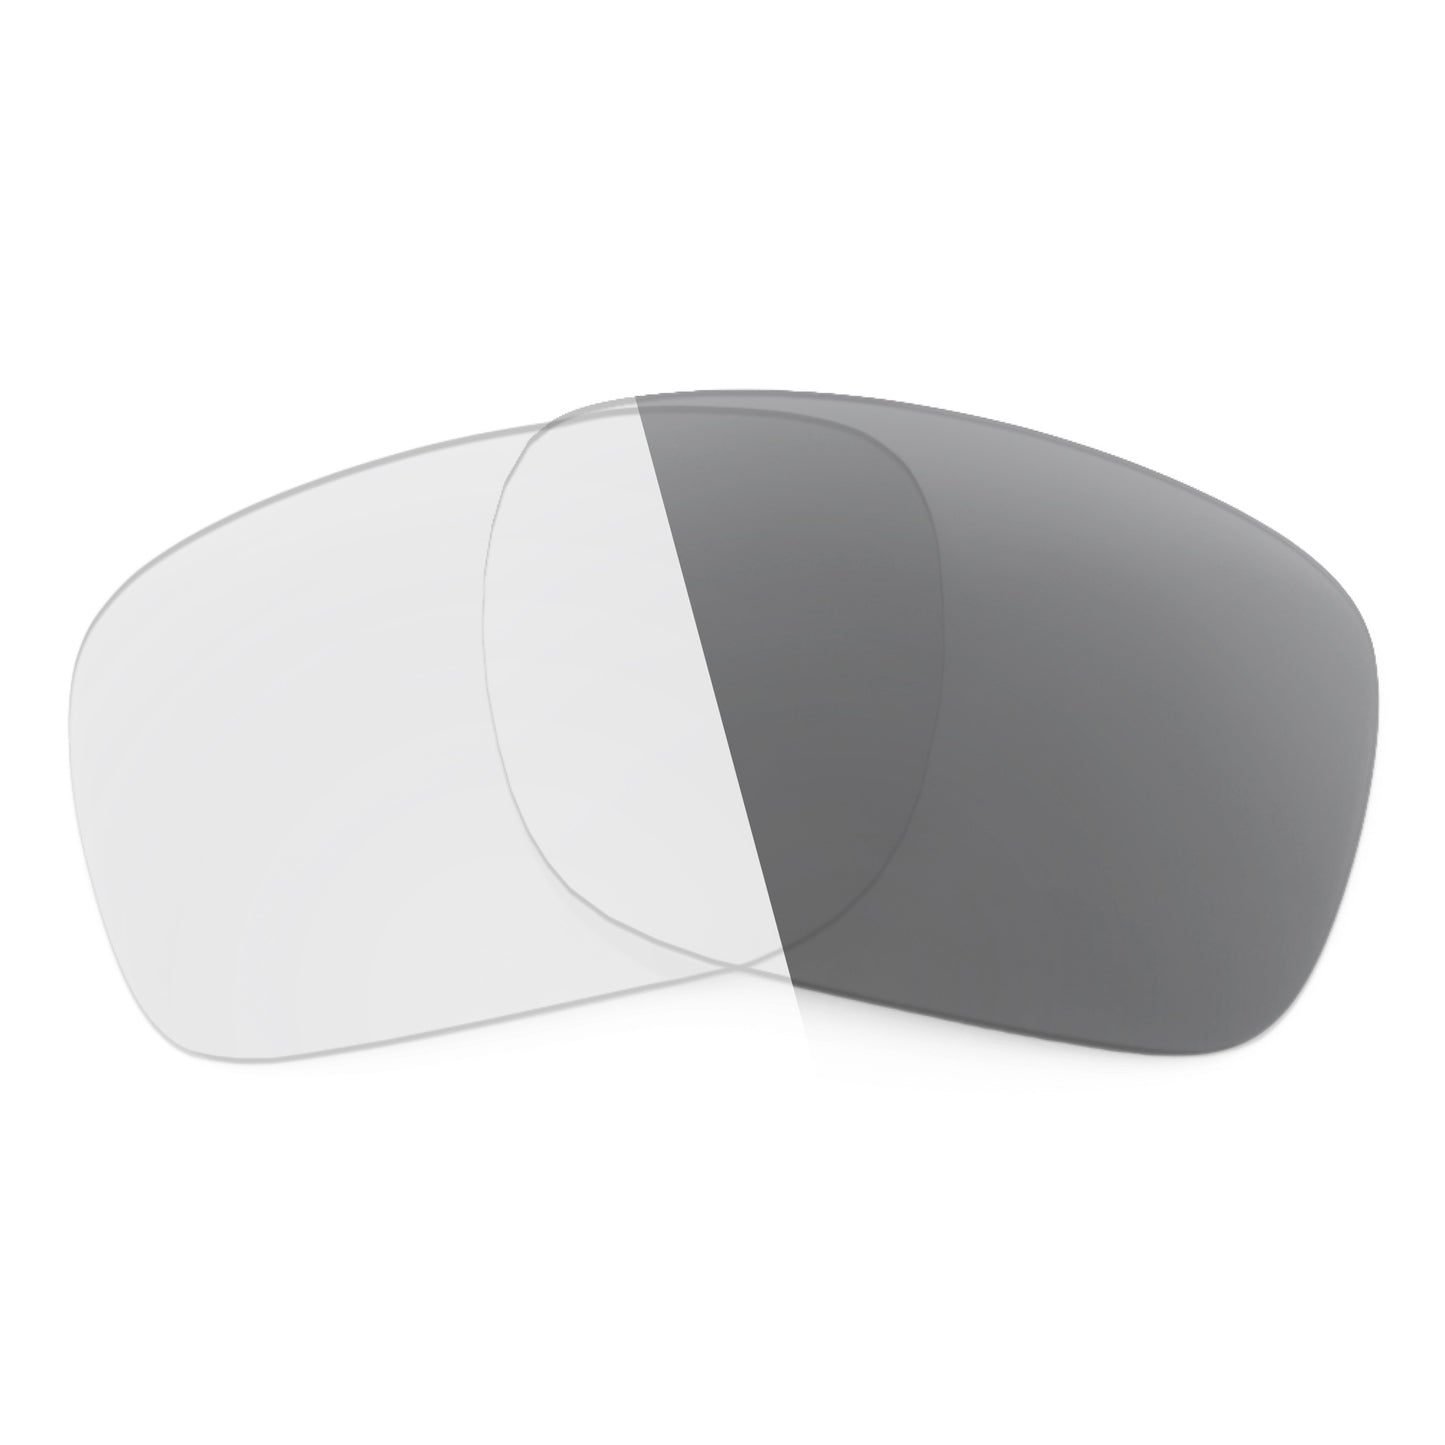 Revant replacement lenses for Oakley Targetline (Low Bridge Fit) Non-Polarized Adapt Gray Photochromic